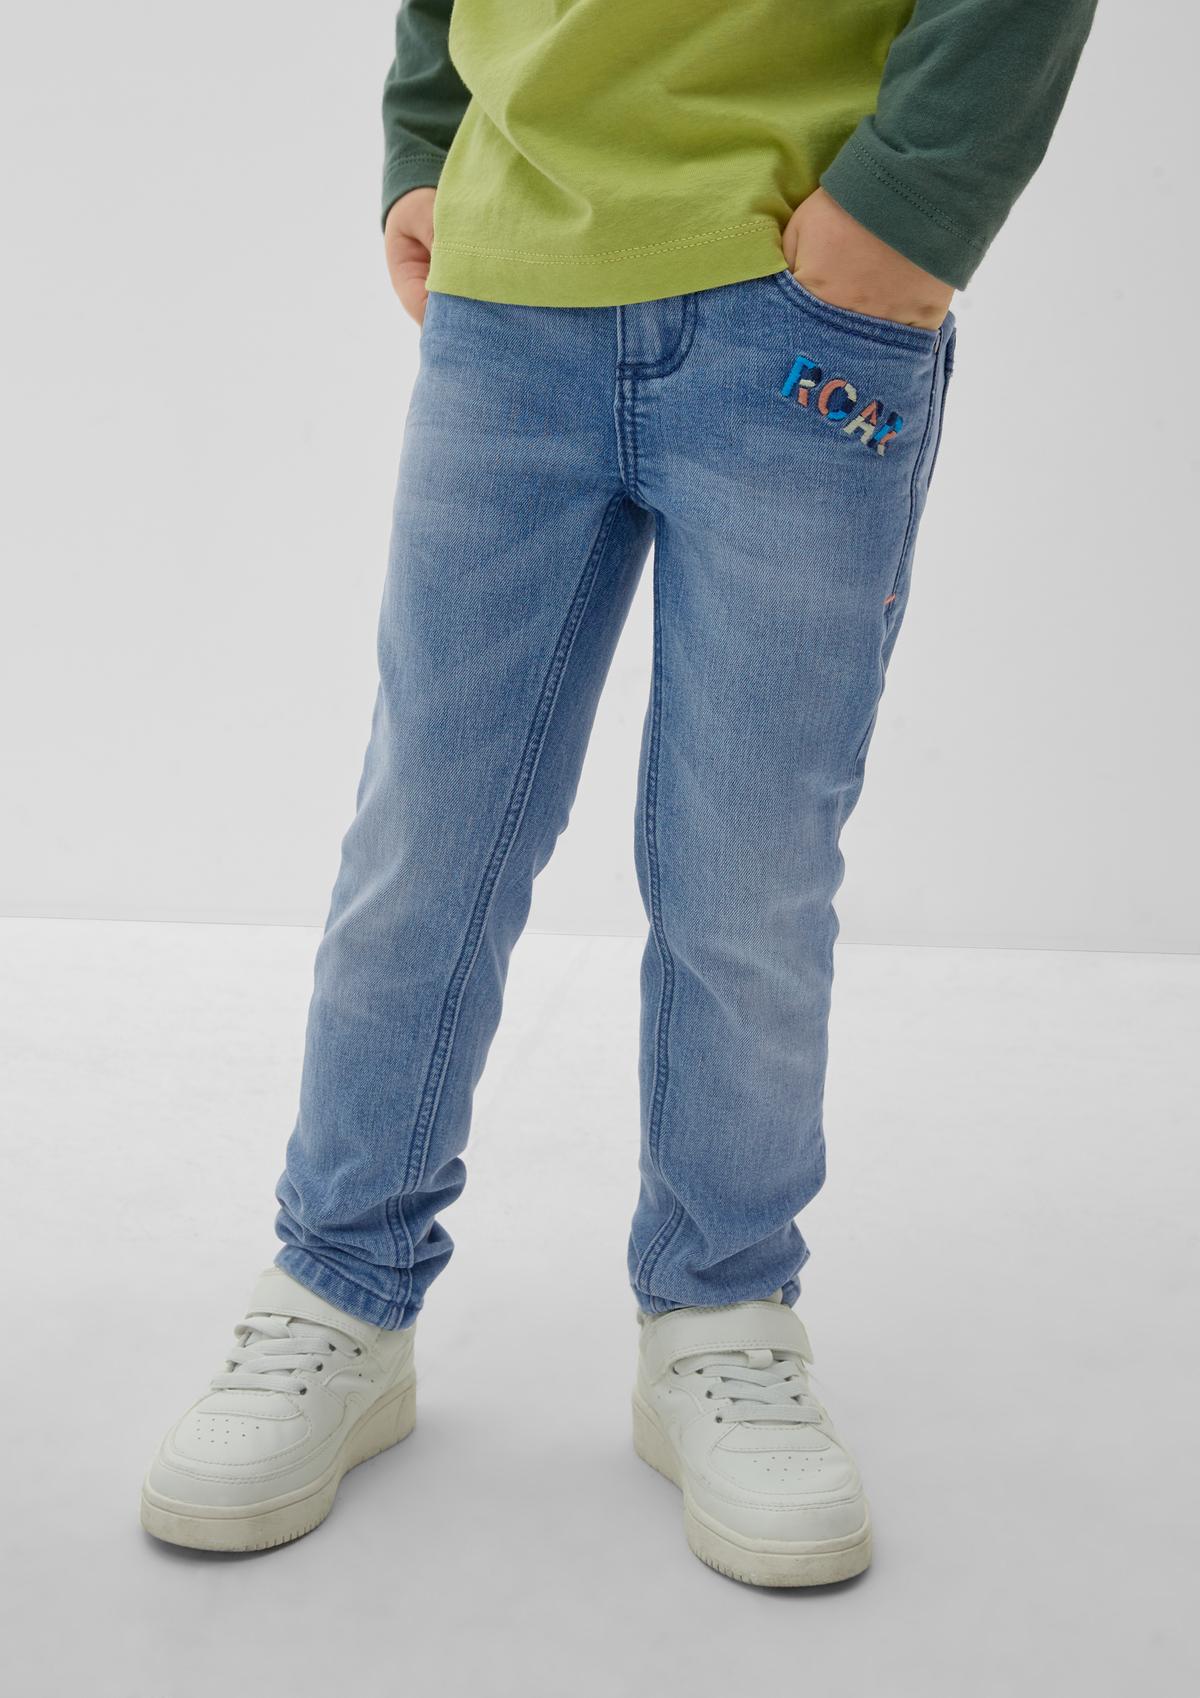 Brad jeans / slim fit / mid rise / slim leg